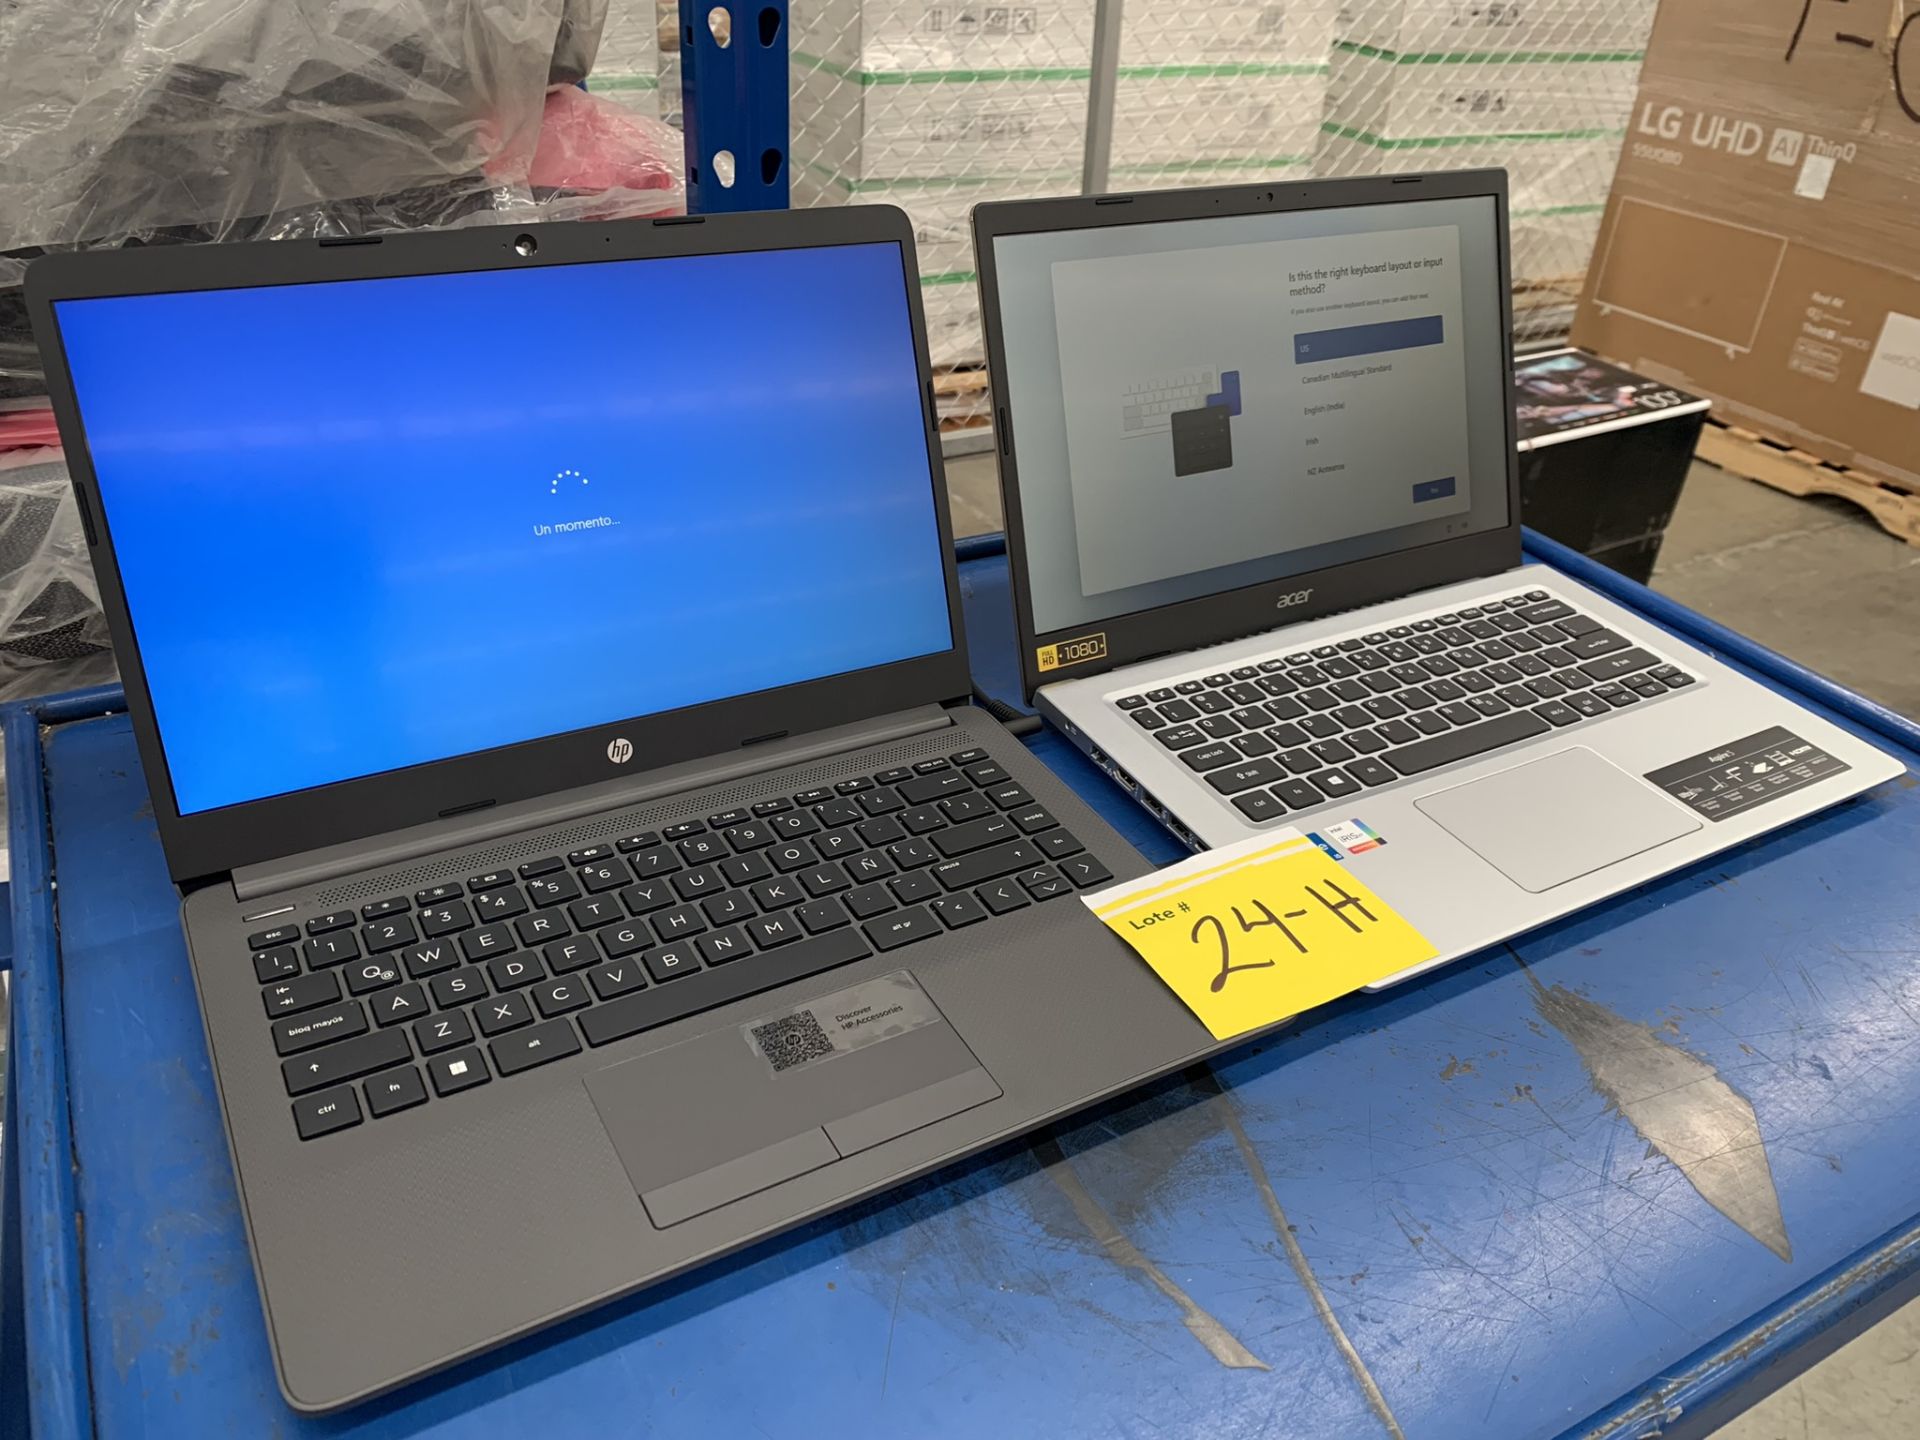 Lote De 3 Laptops Contiene: 1 Laptop Marca Acer Modelo Aspire 5 Serie 1022F3400 Color Gris So Windo - Image 5 of 18